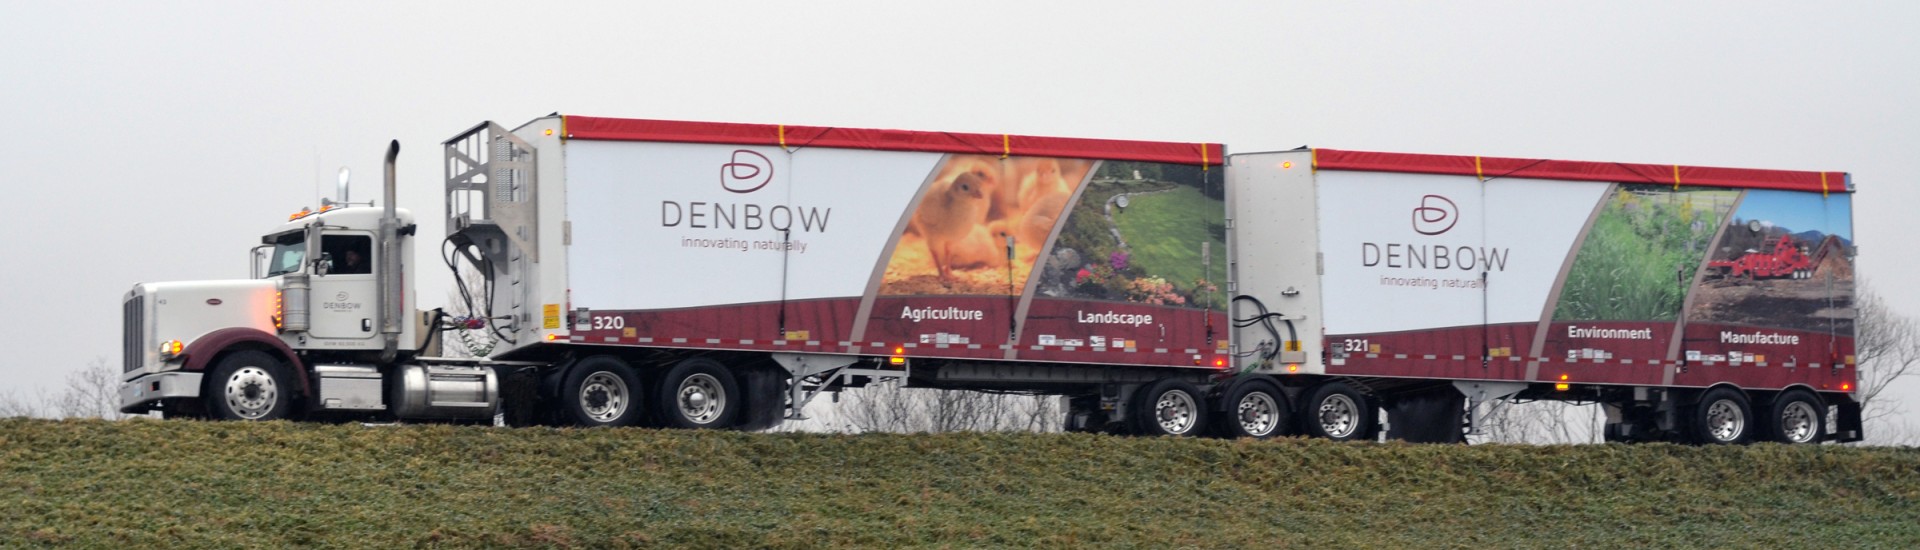 Denbow double trailer bulk transport truck